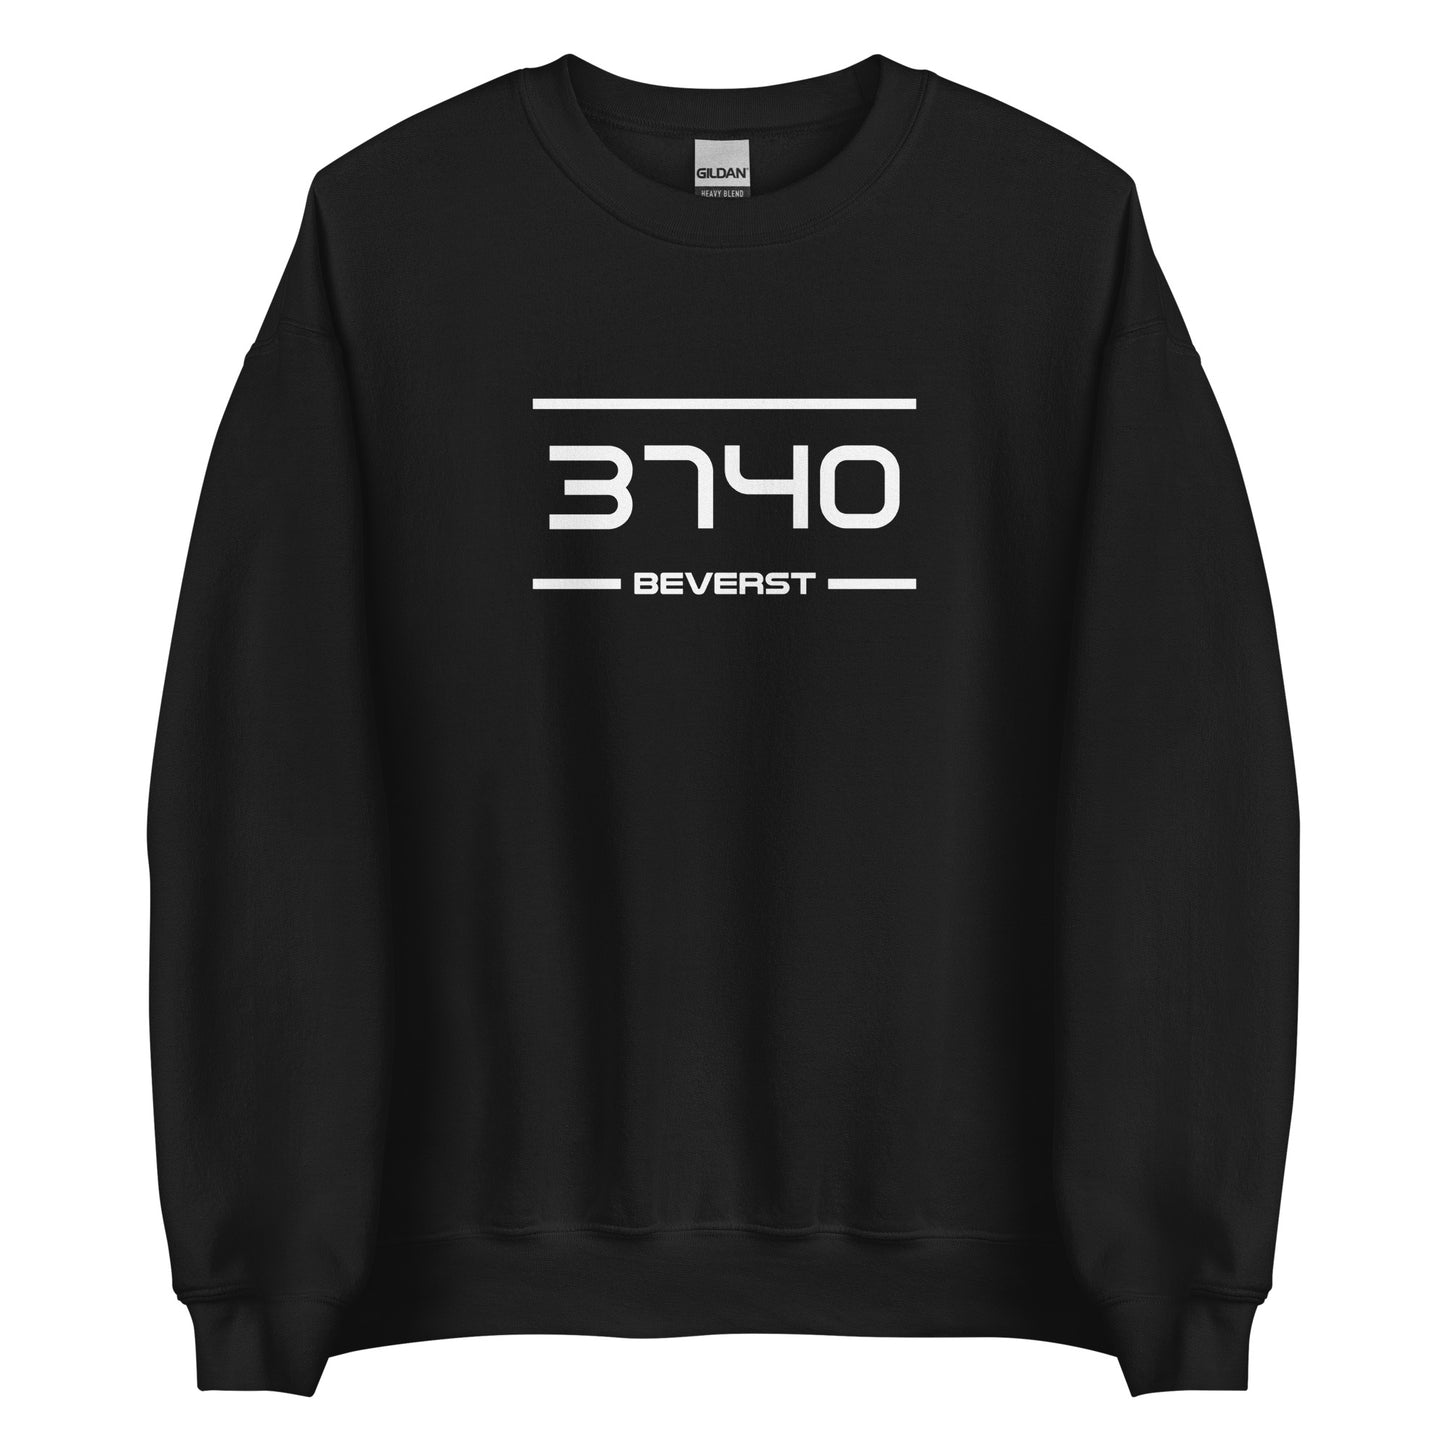 Sweater - 3740 - Beverst (M/V)